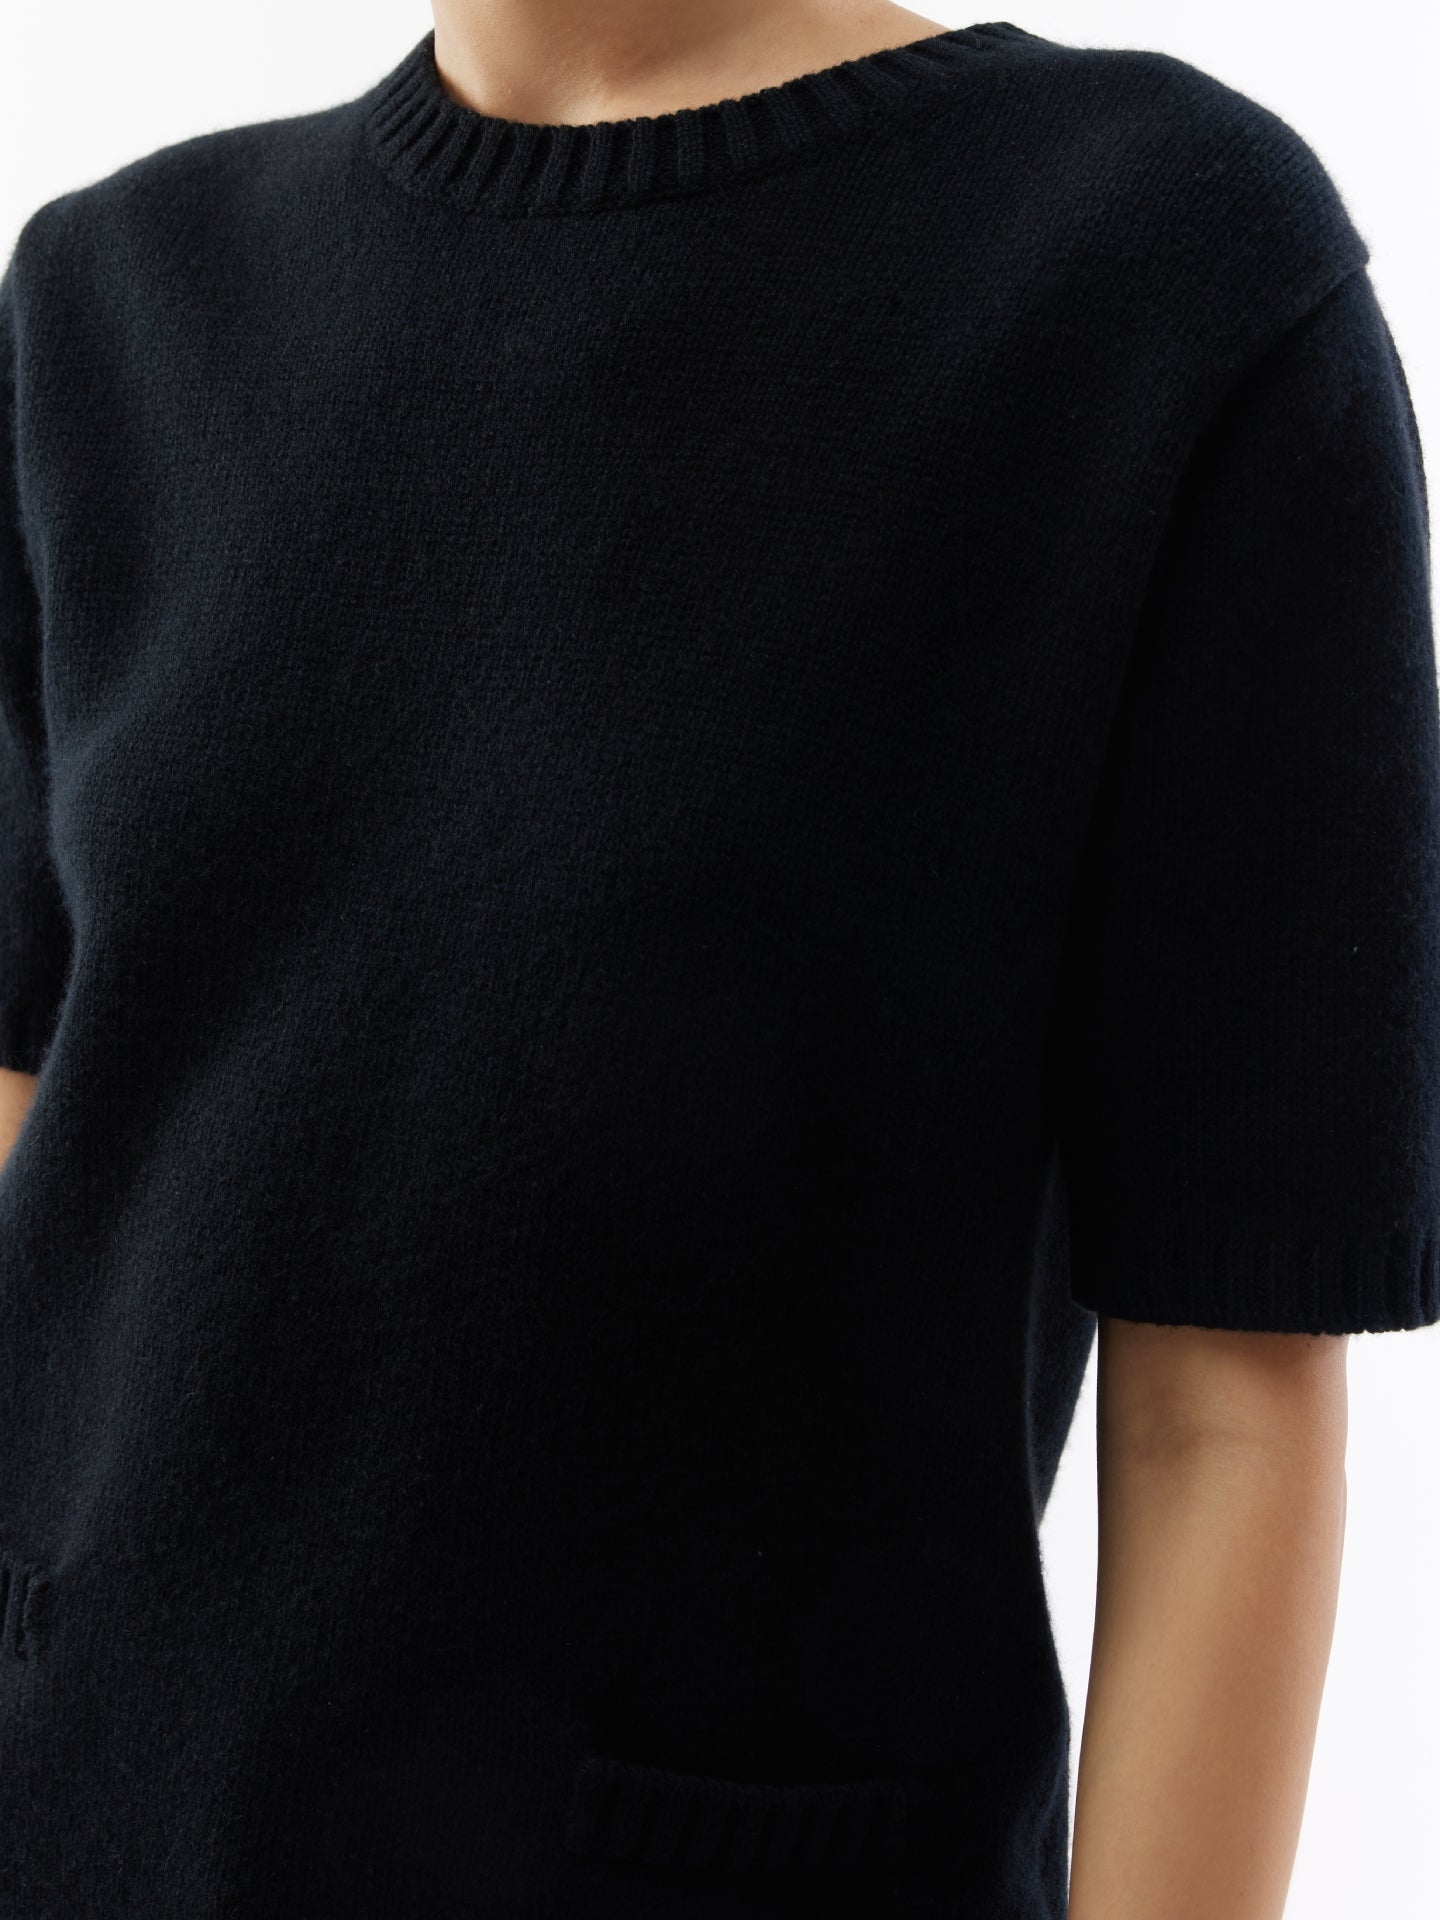 Women's Cashmere C-Neck T-Shirt Black - Gobi Cashmere